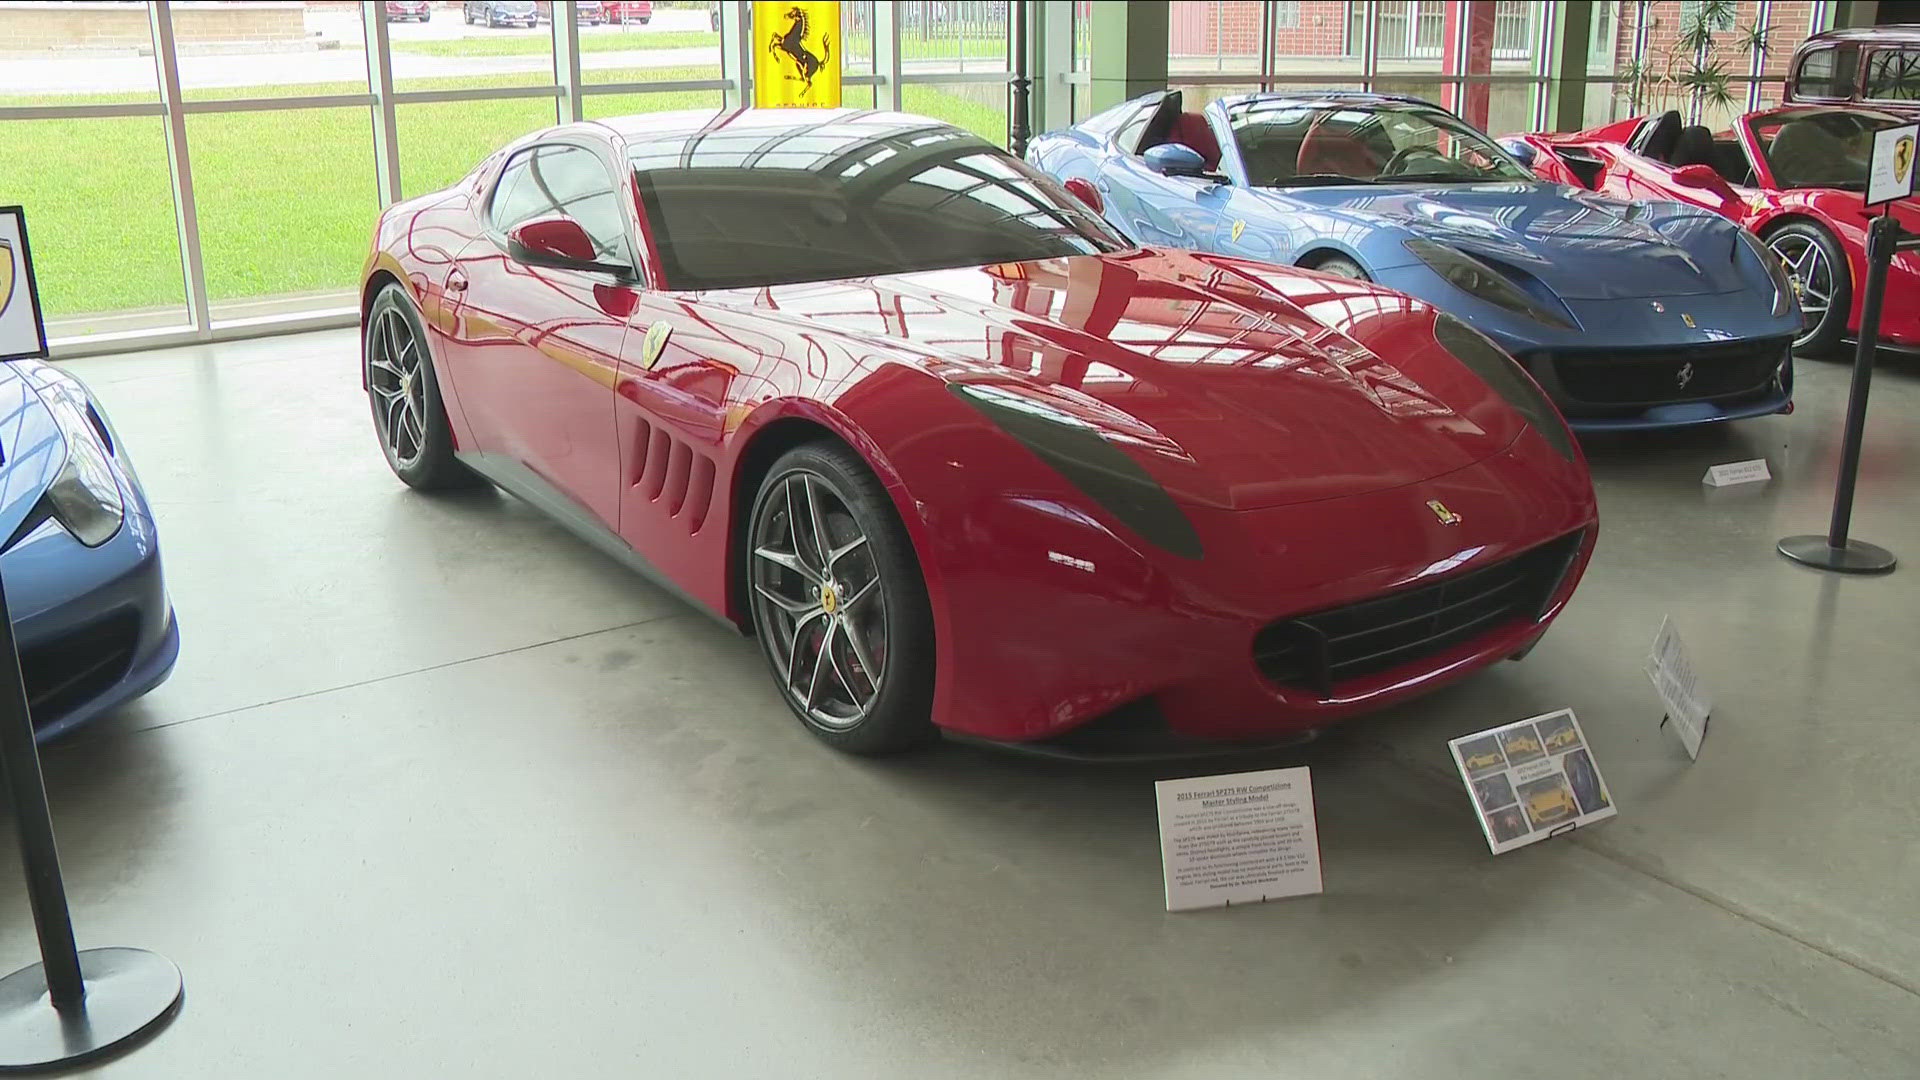 The Pierce-Arrow Museum unveiled a one-of-its-kind SP275 Ferrari.